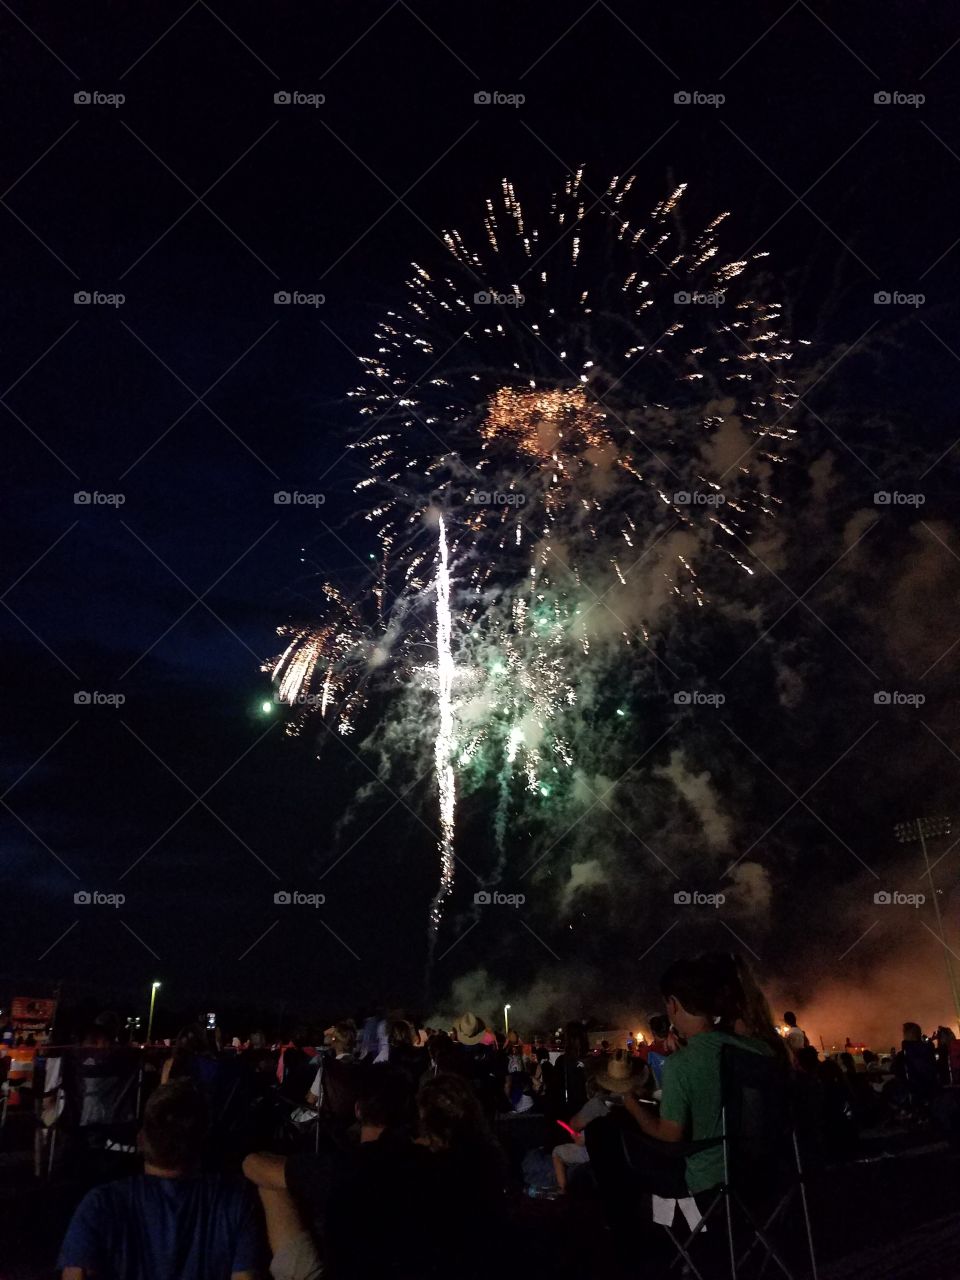 Festival, Fireworks, People, Celebration, Party